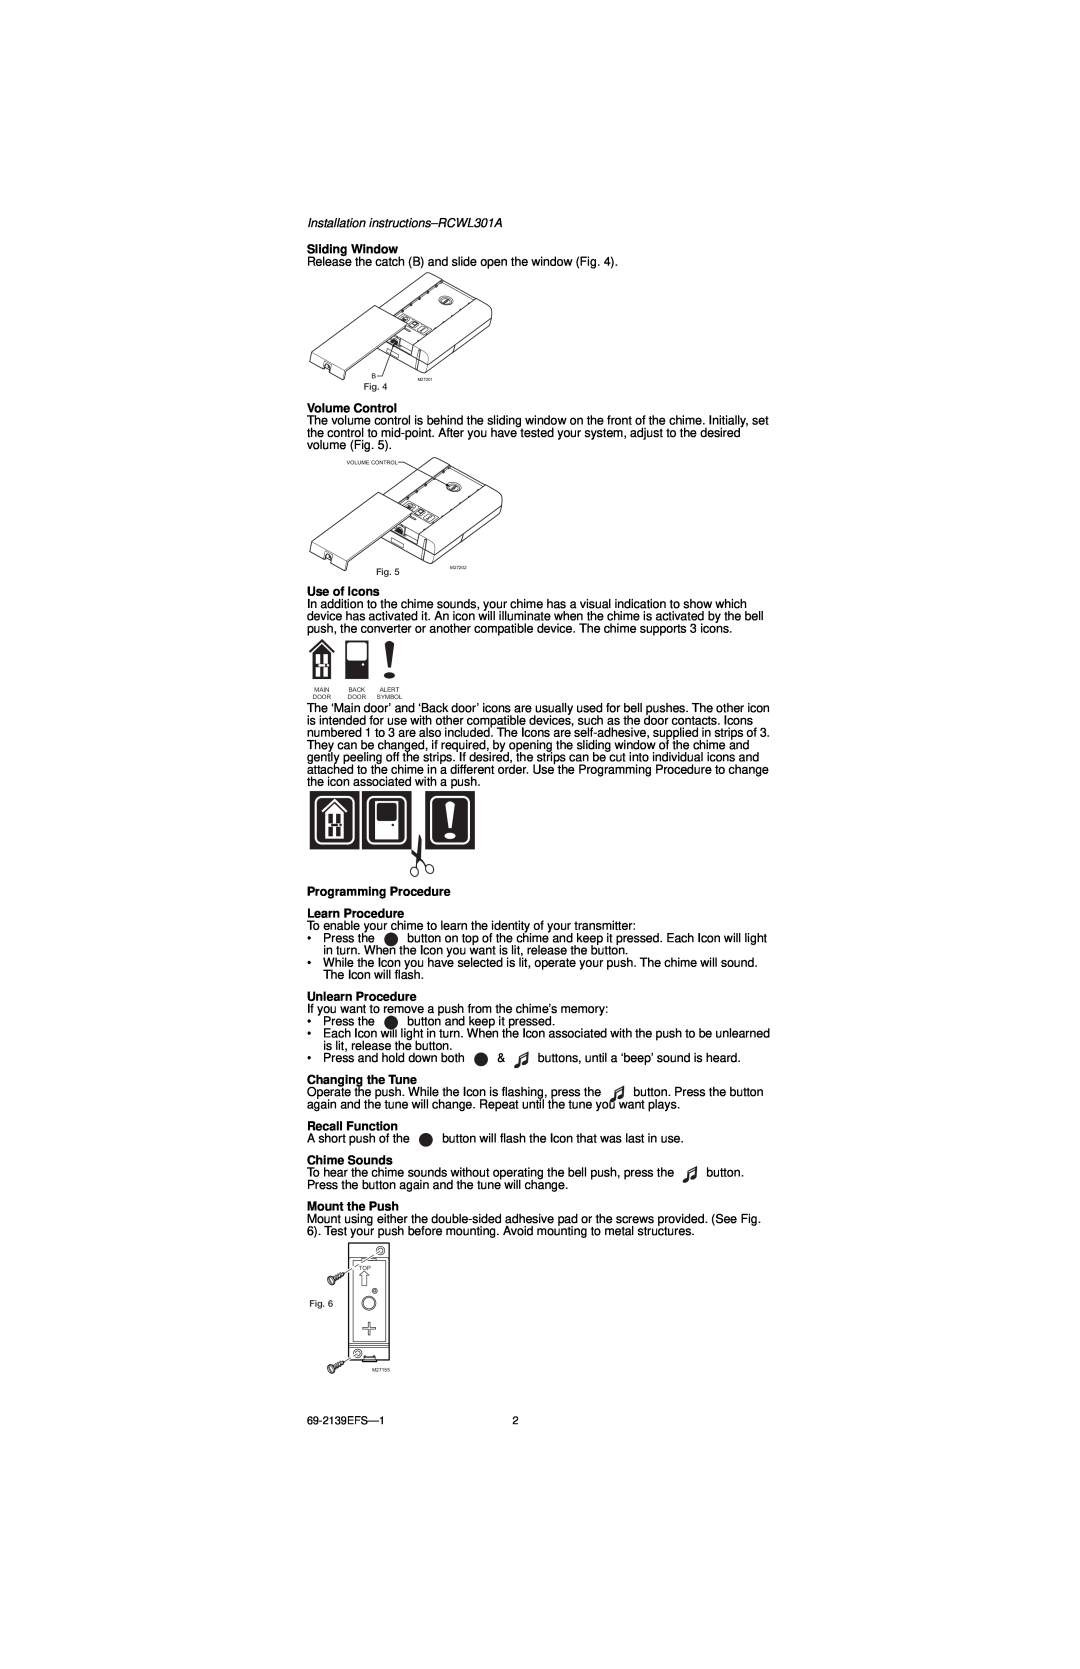 Honeywell Installation instructions-RCWL301A, Sliding Window, Volume Control, Use of Icons, Unlearn Procedure 